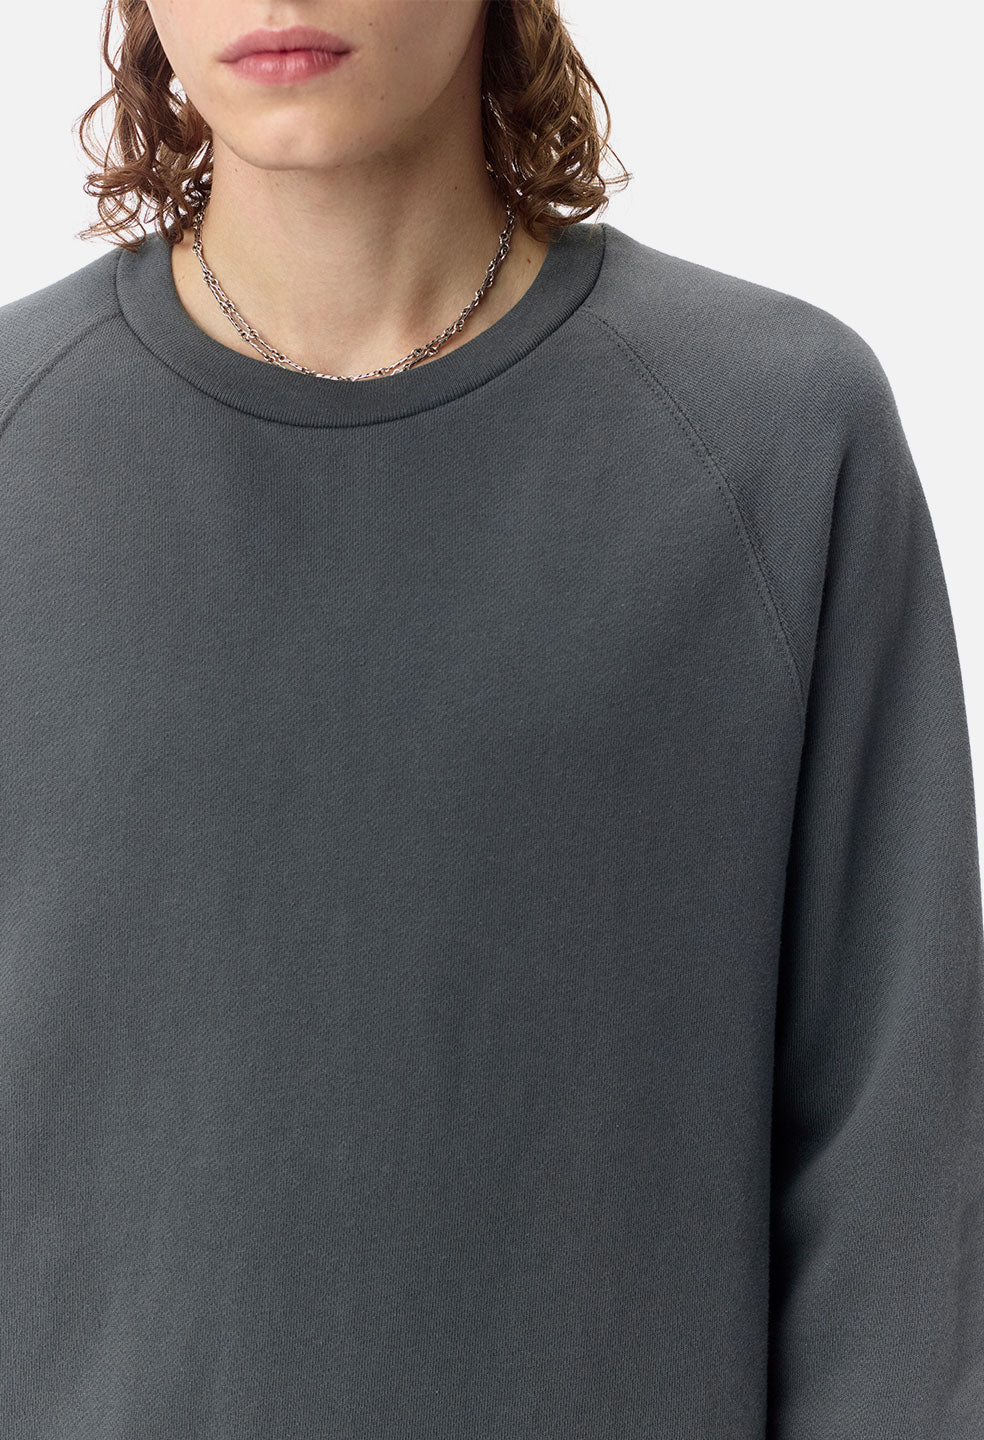 John Elliott Raglan Crewneck Carbon Gray Pullover Sweatshirt Size Small NWT  - Sweaters